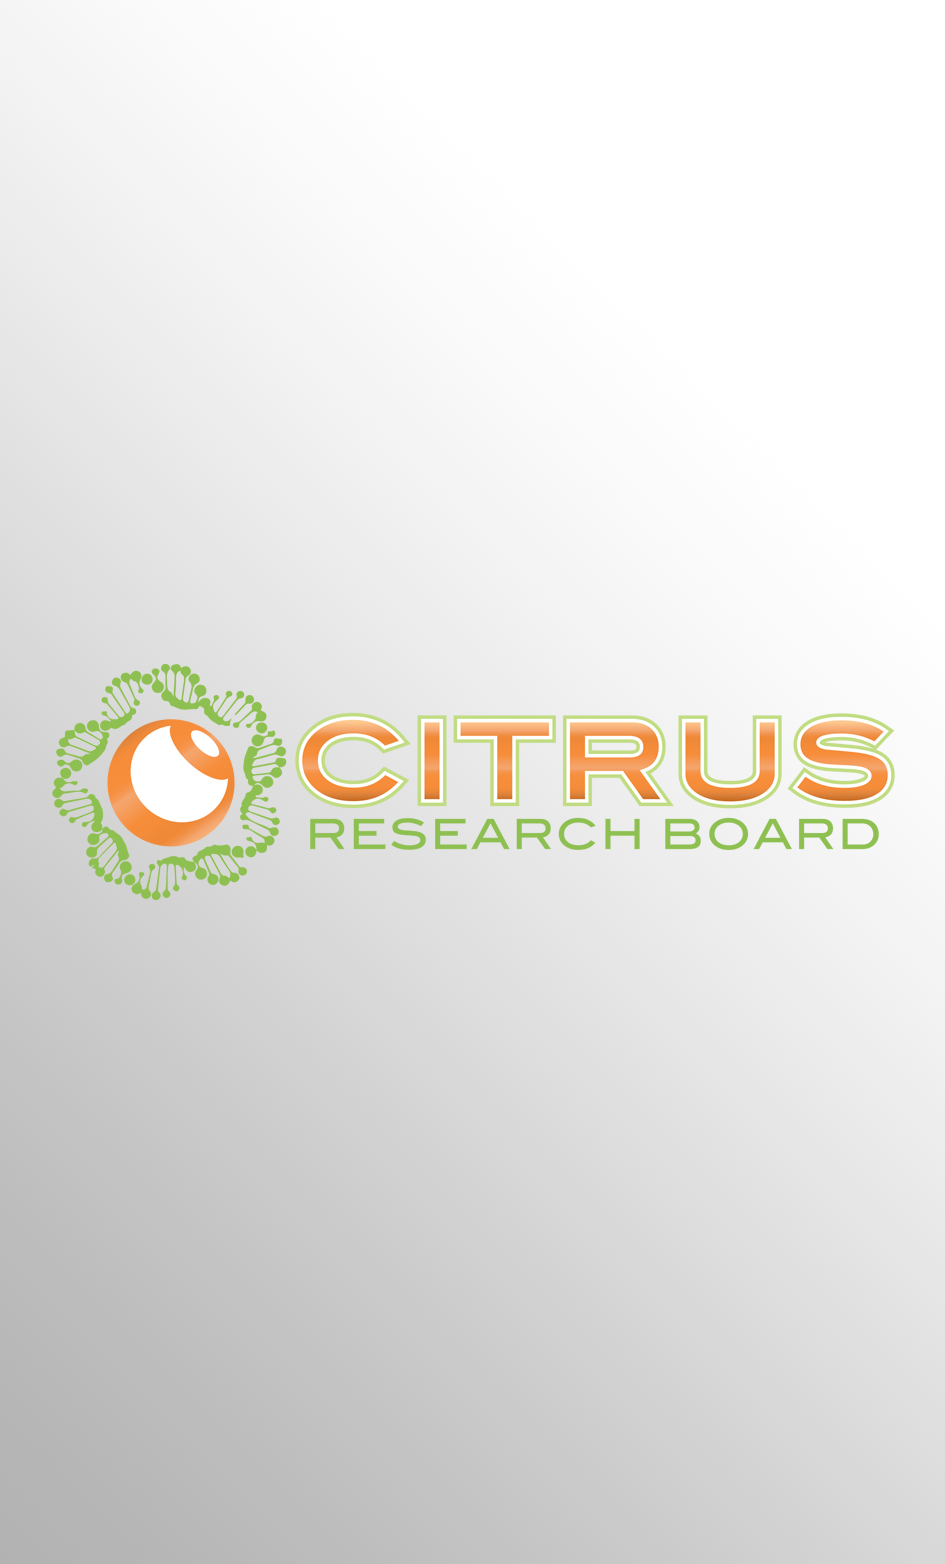 Citrus Research Board Ground Media Tour Case Study